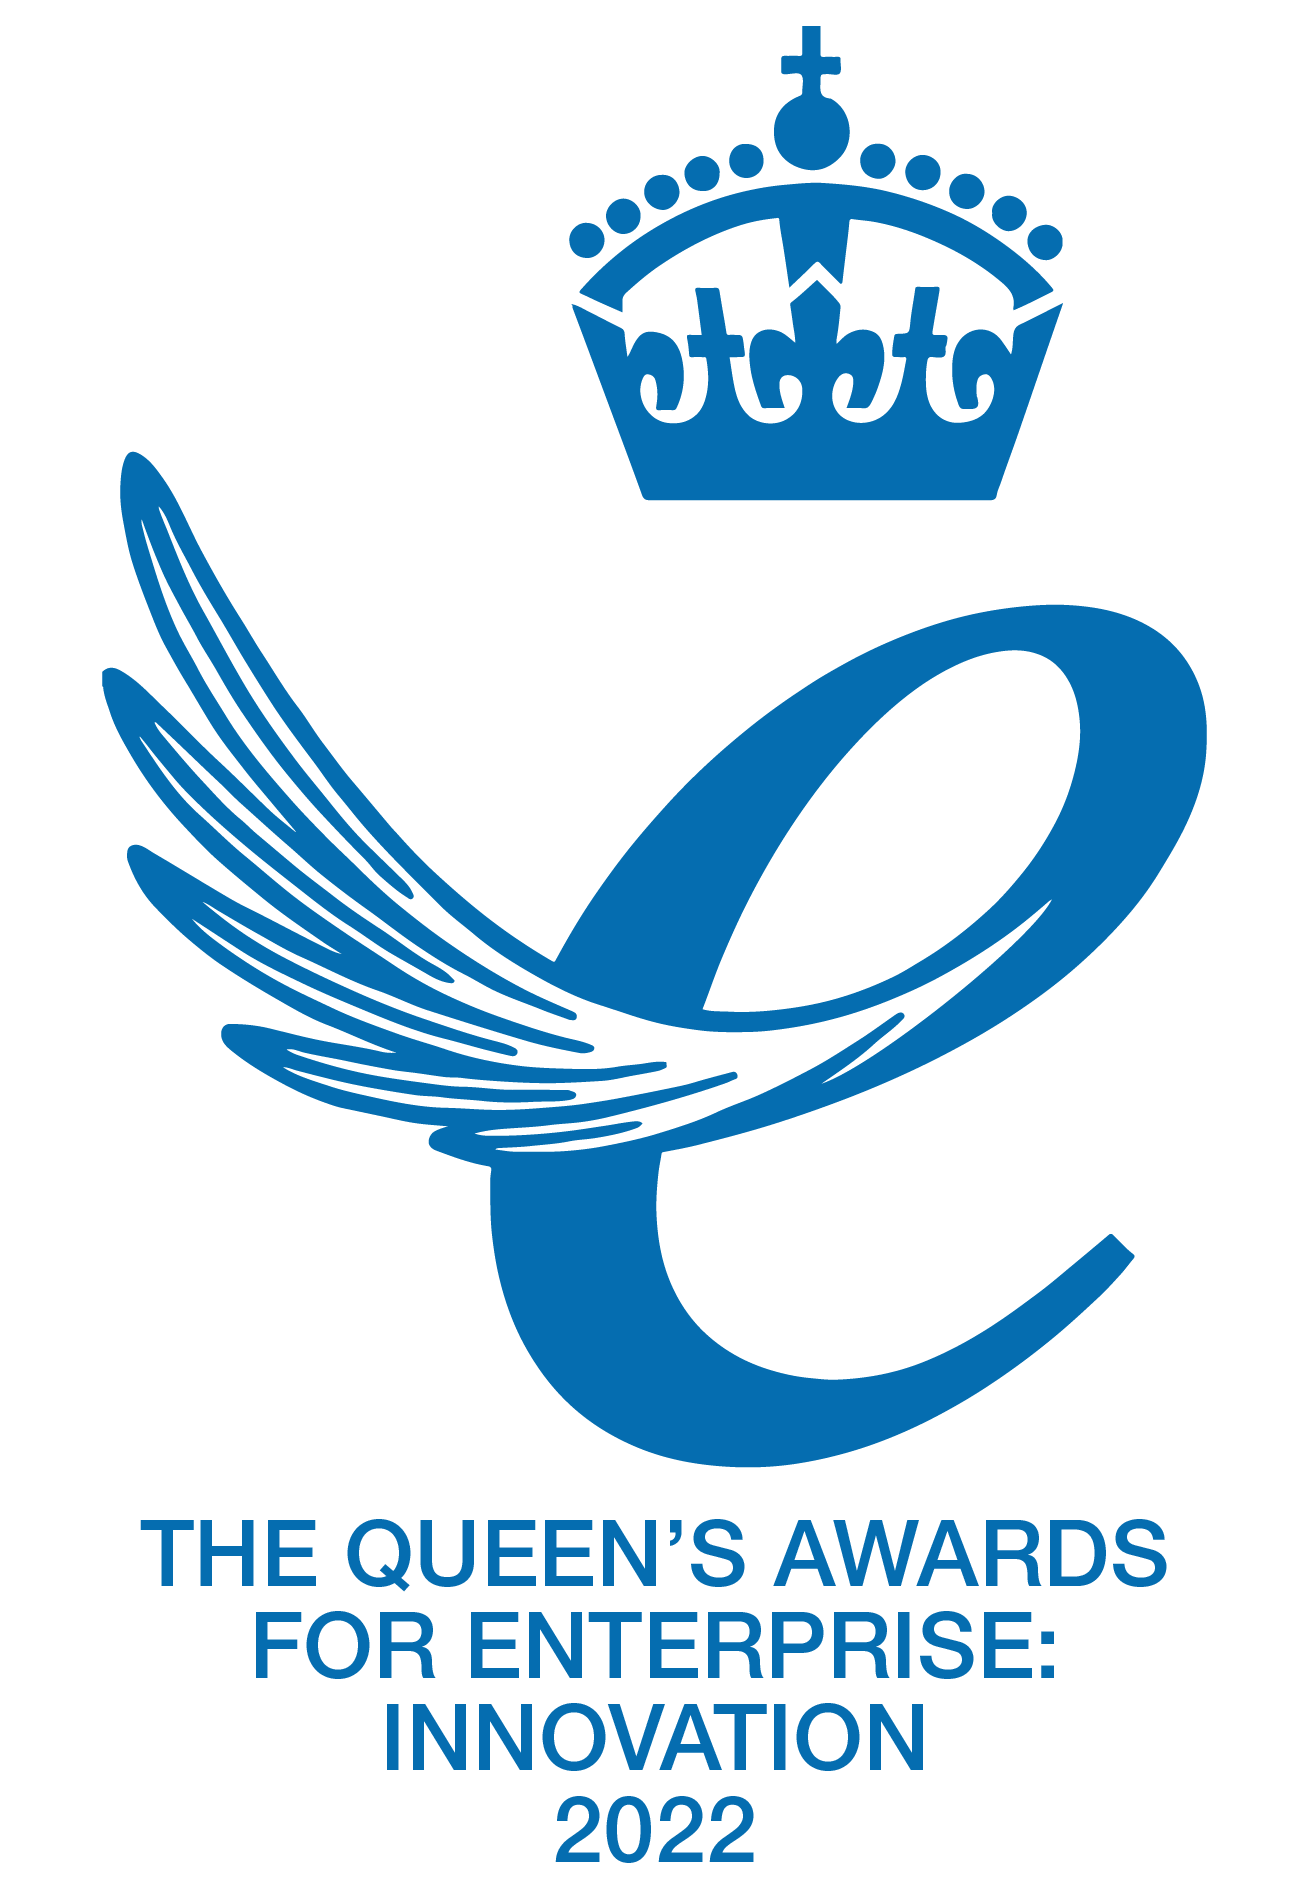 The Queen's Awards for Enterprise: Innovation 2022